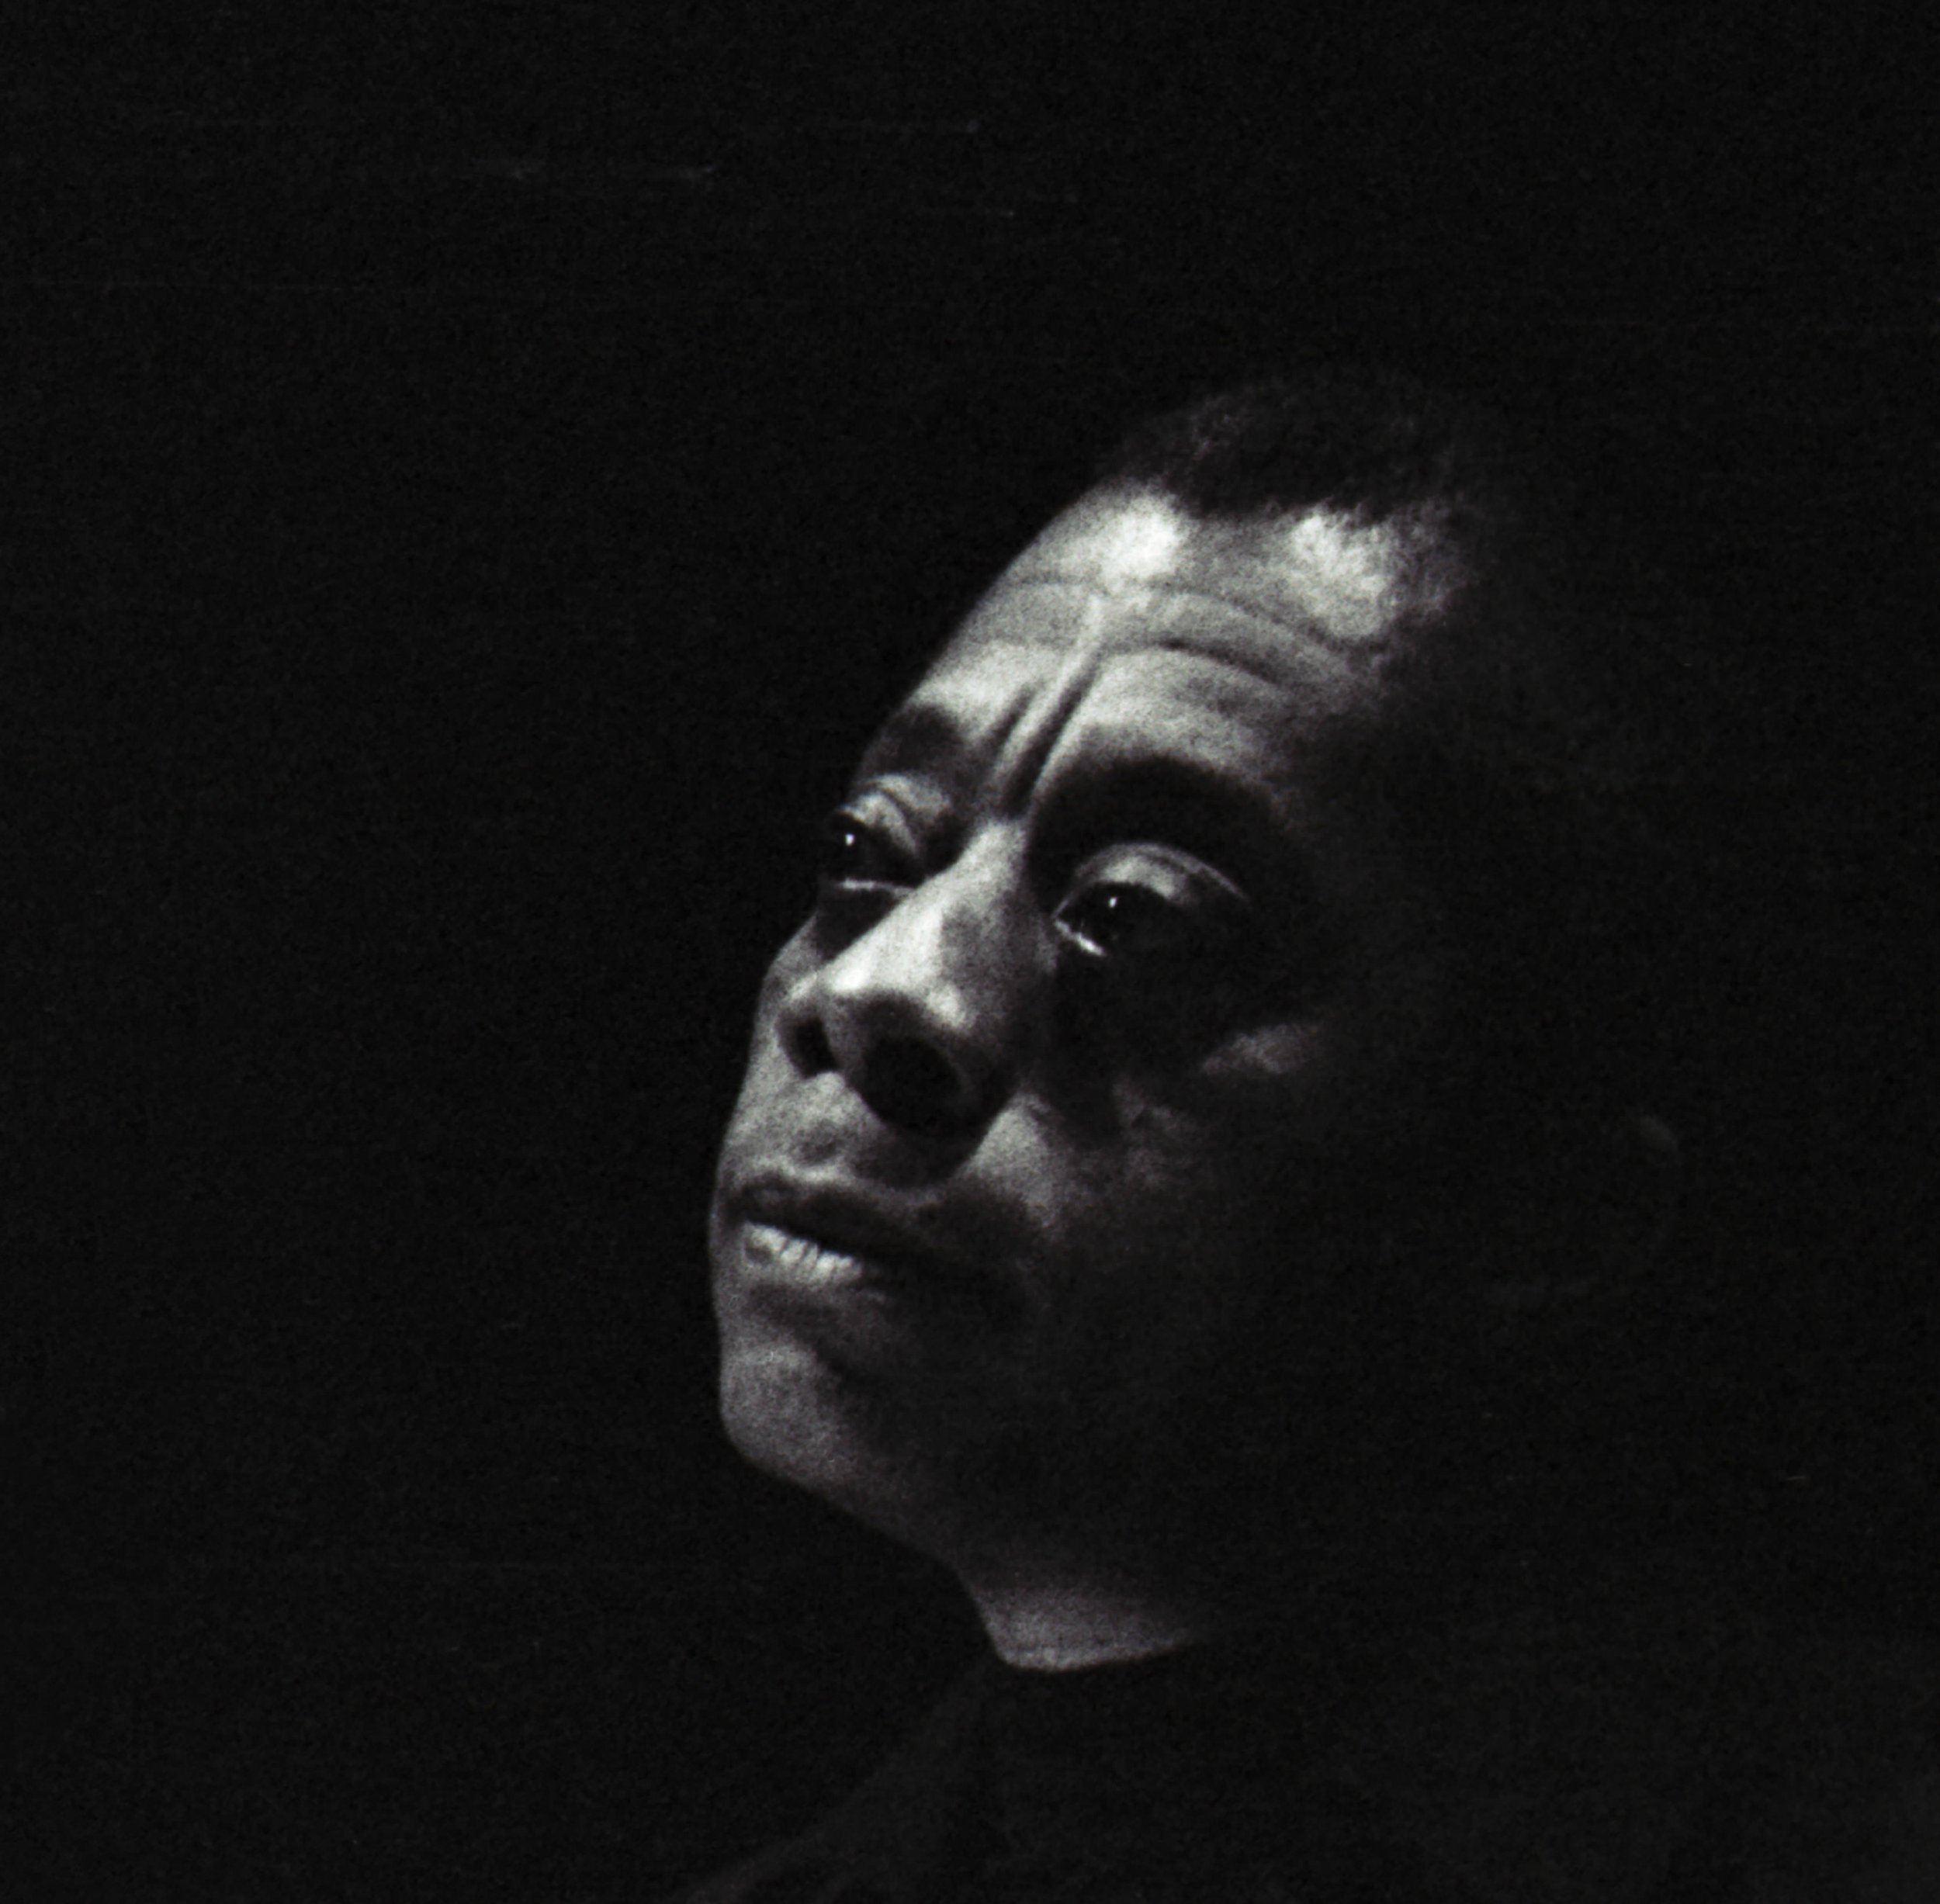 James Baldwin.jpg